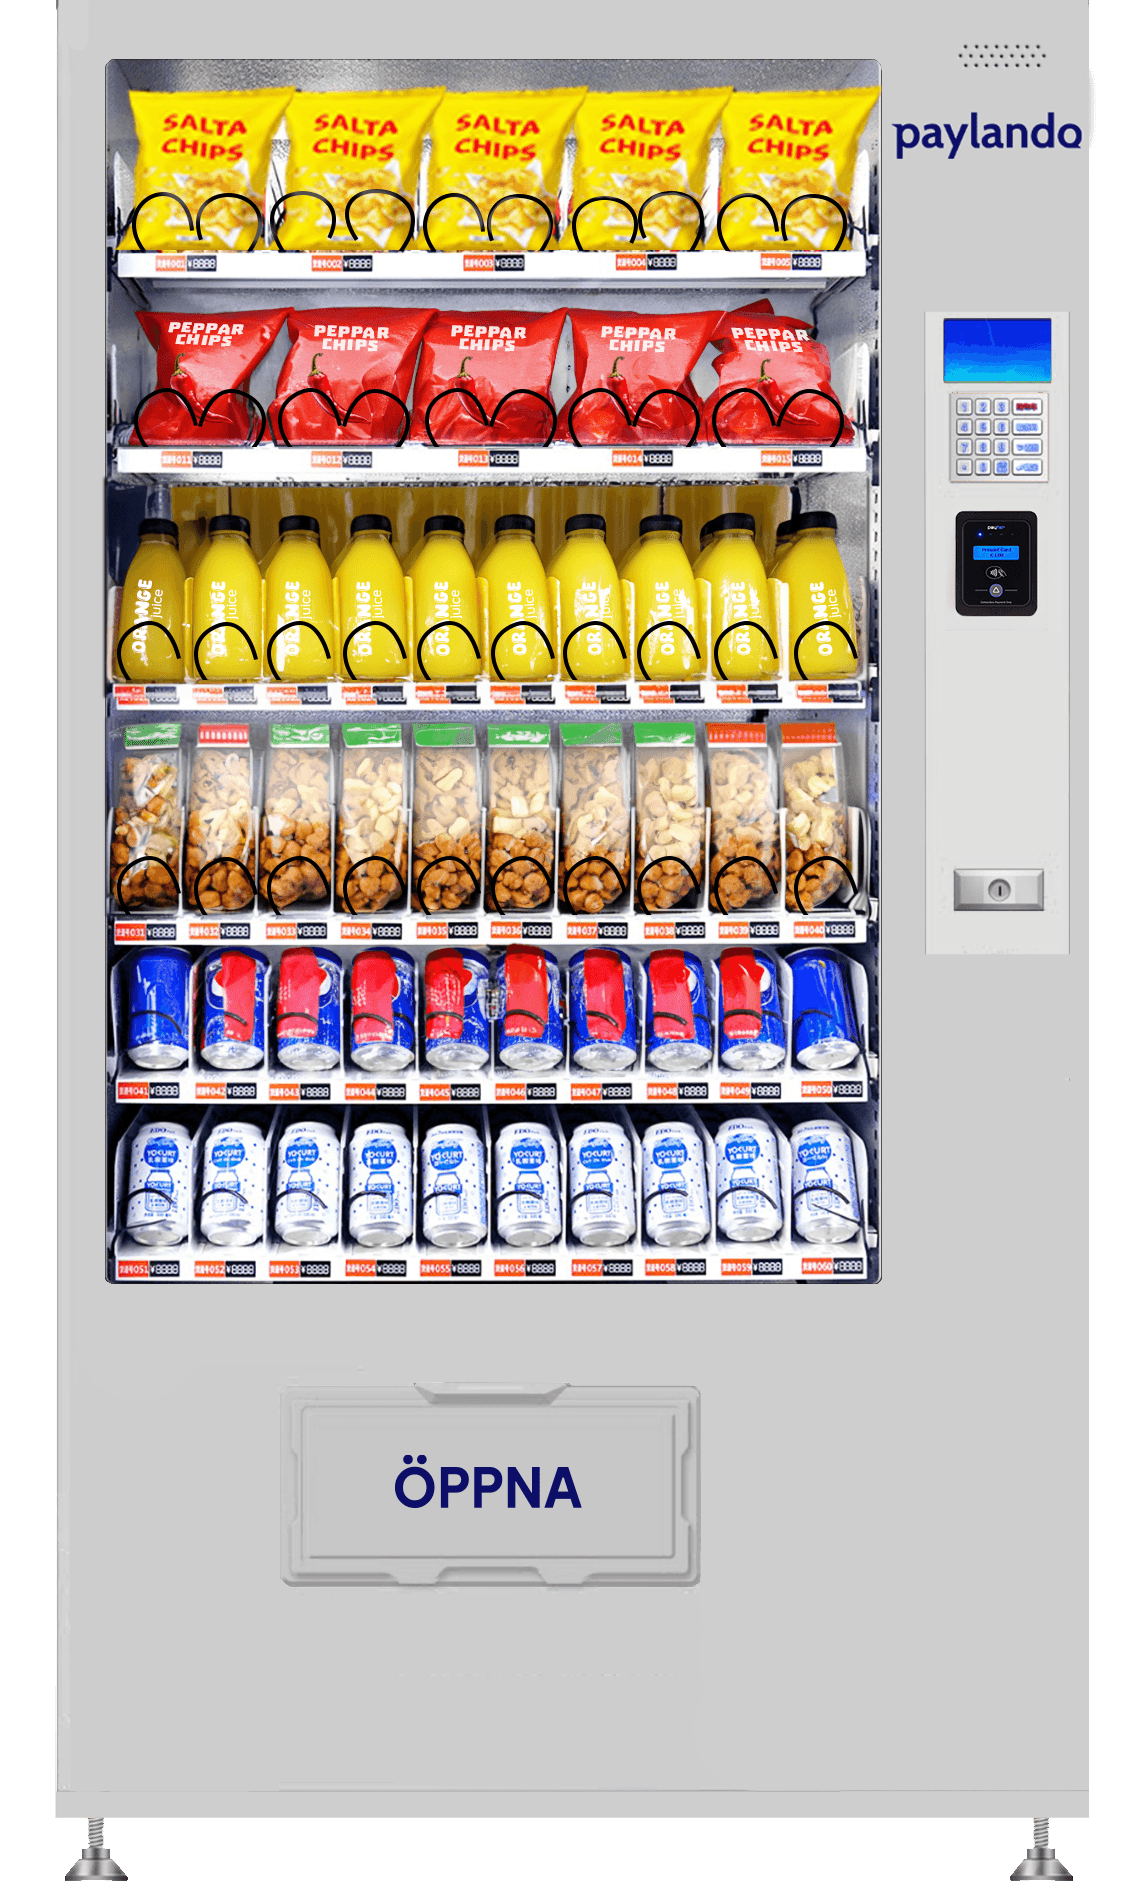 Paylando Versa: Refrigerated vending machine with keypad